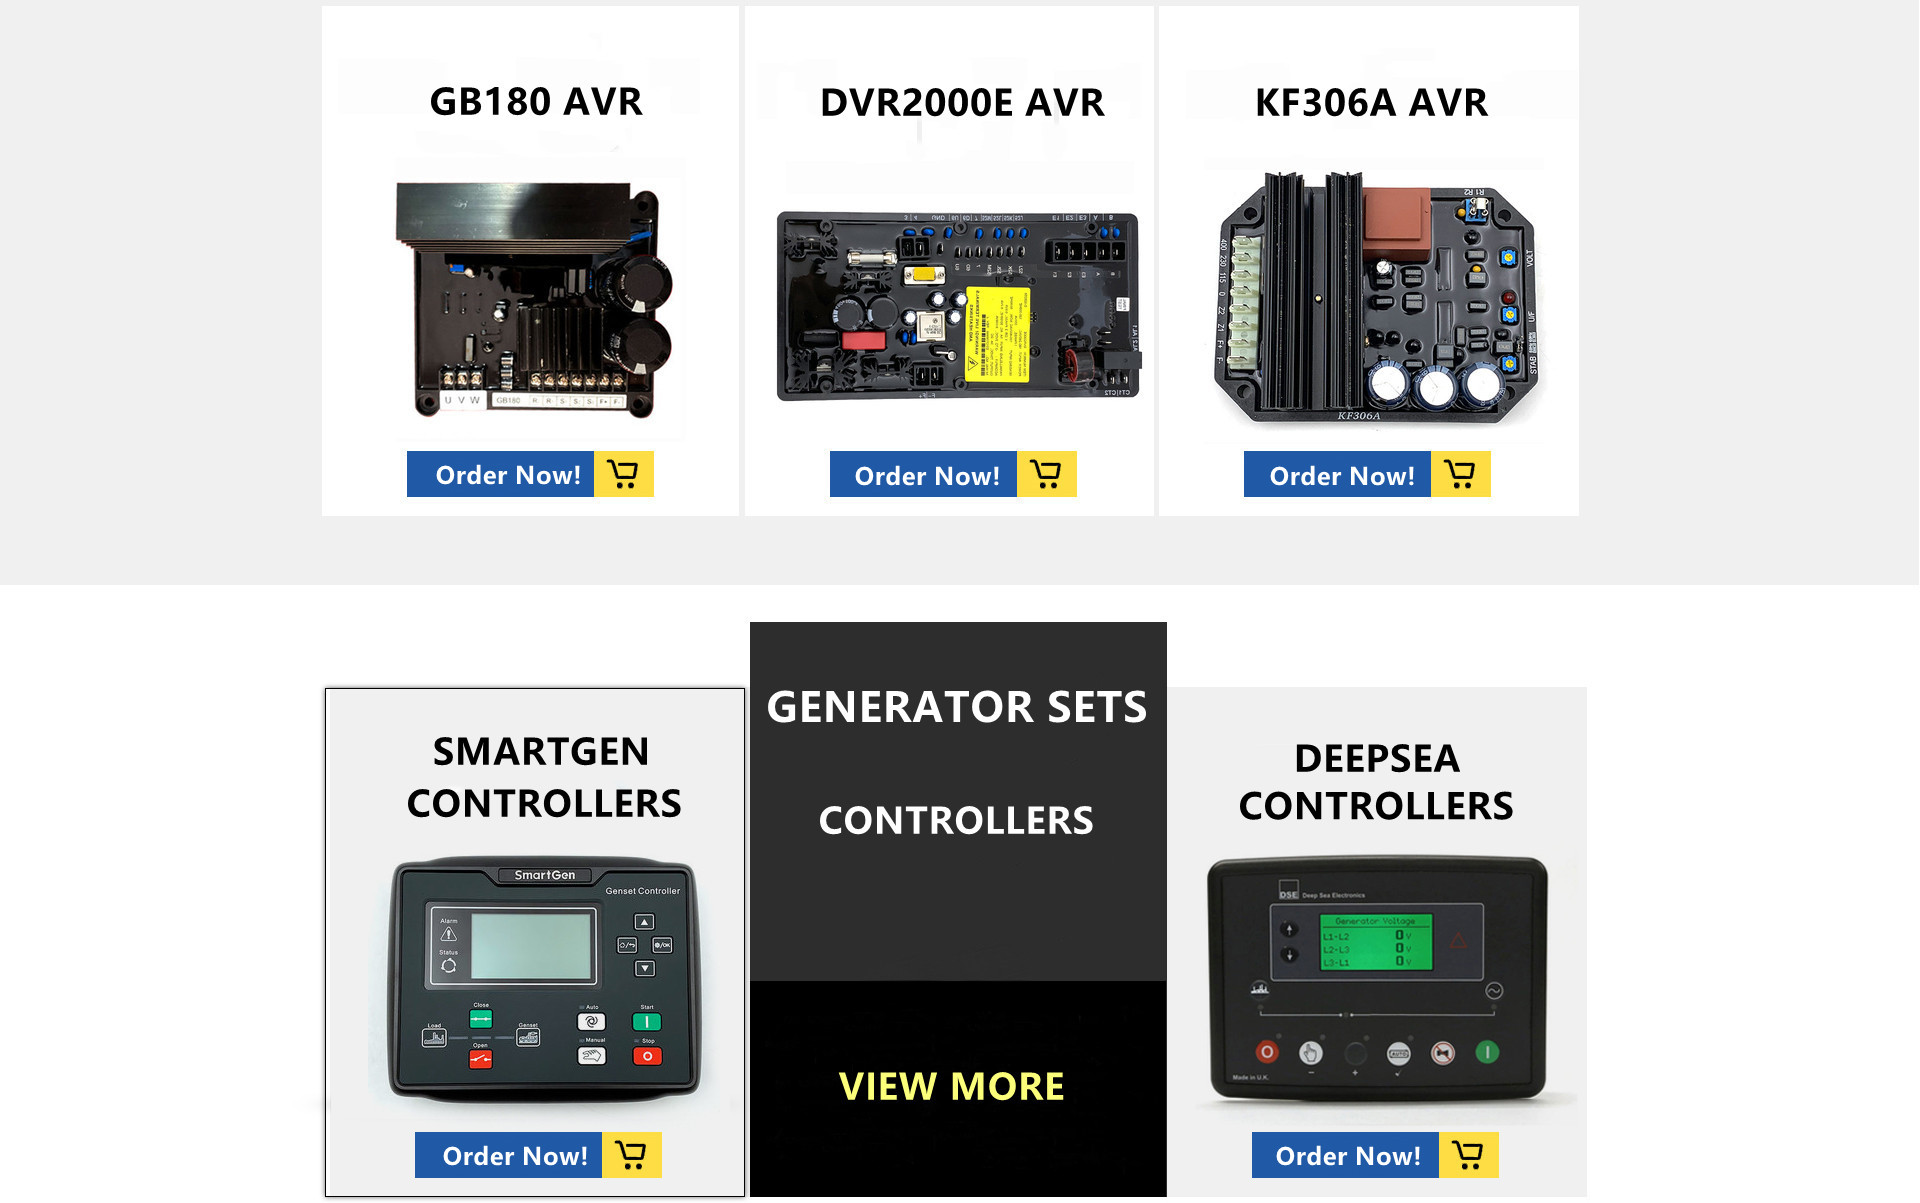 //cdnus.globsolve.com/letongenerator/3-Diesel-generator-parts.jpg